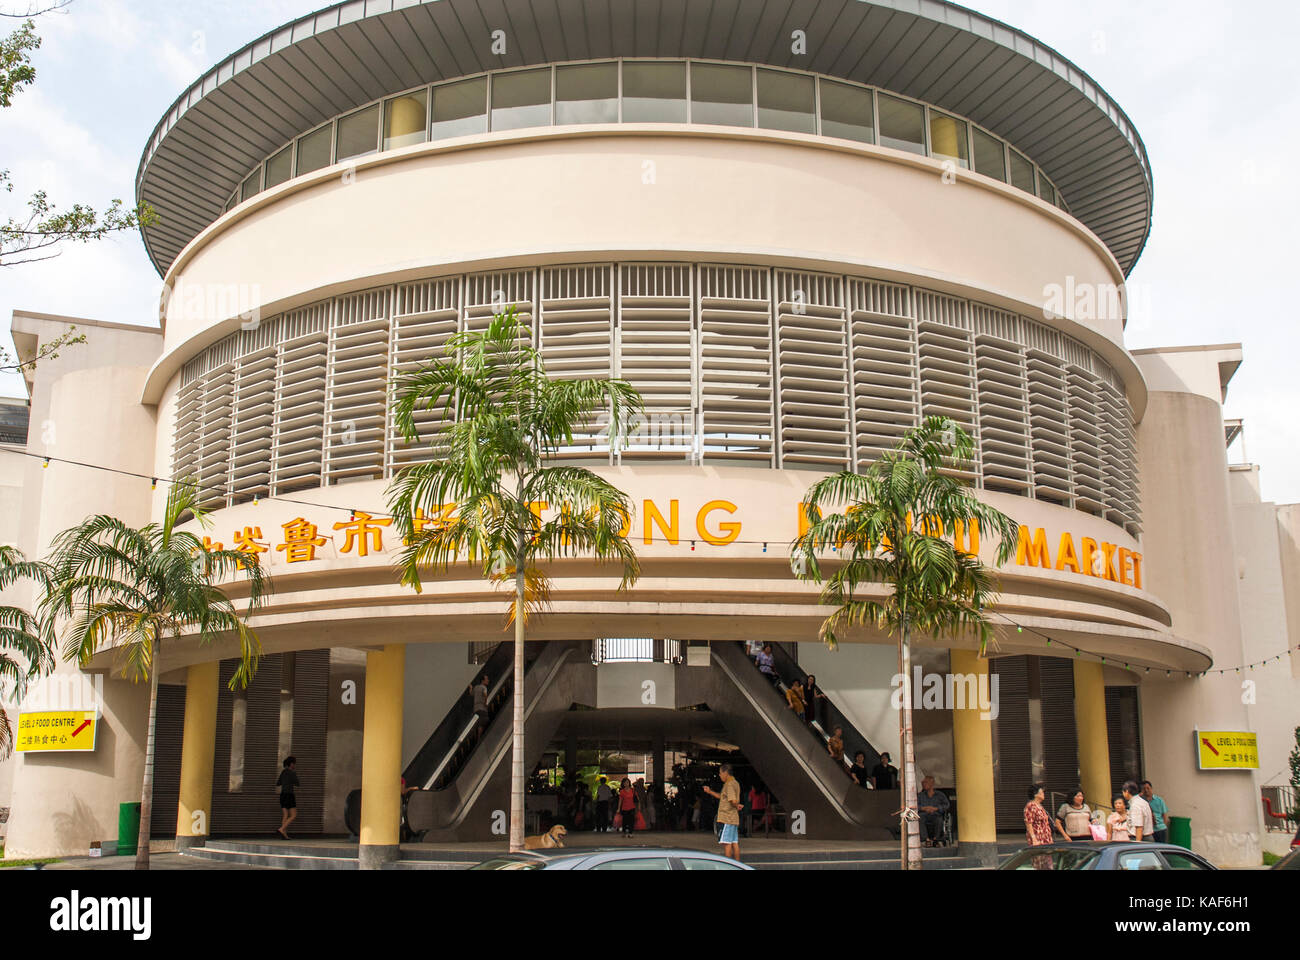 The 'Streamline Moderne' style Tiong Bahru Market building, Singapore Stock Photo